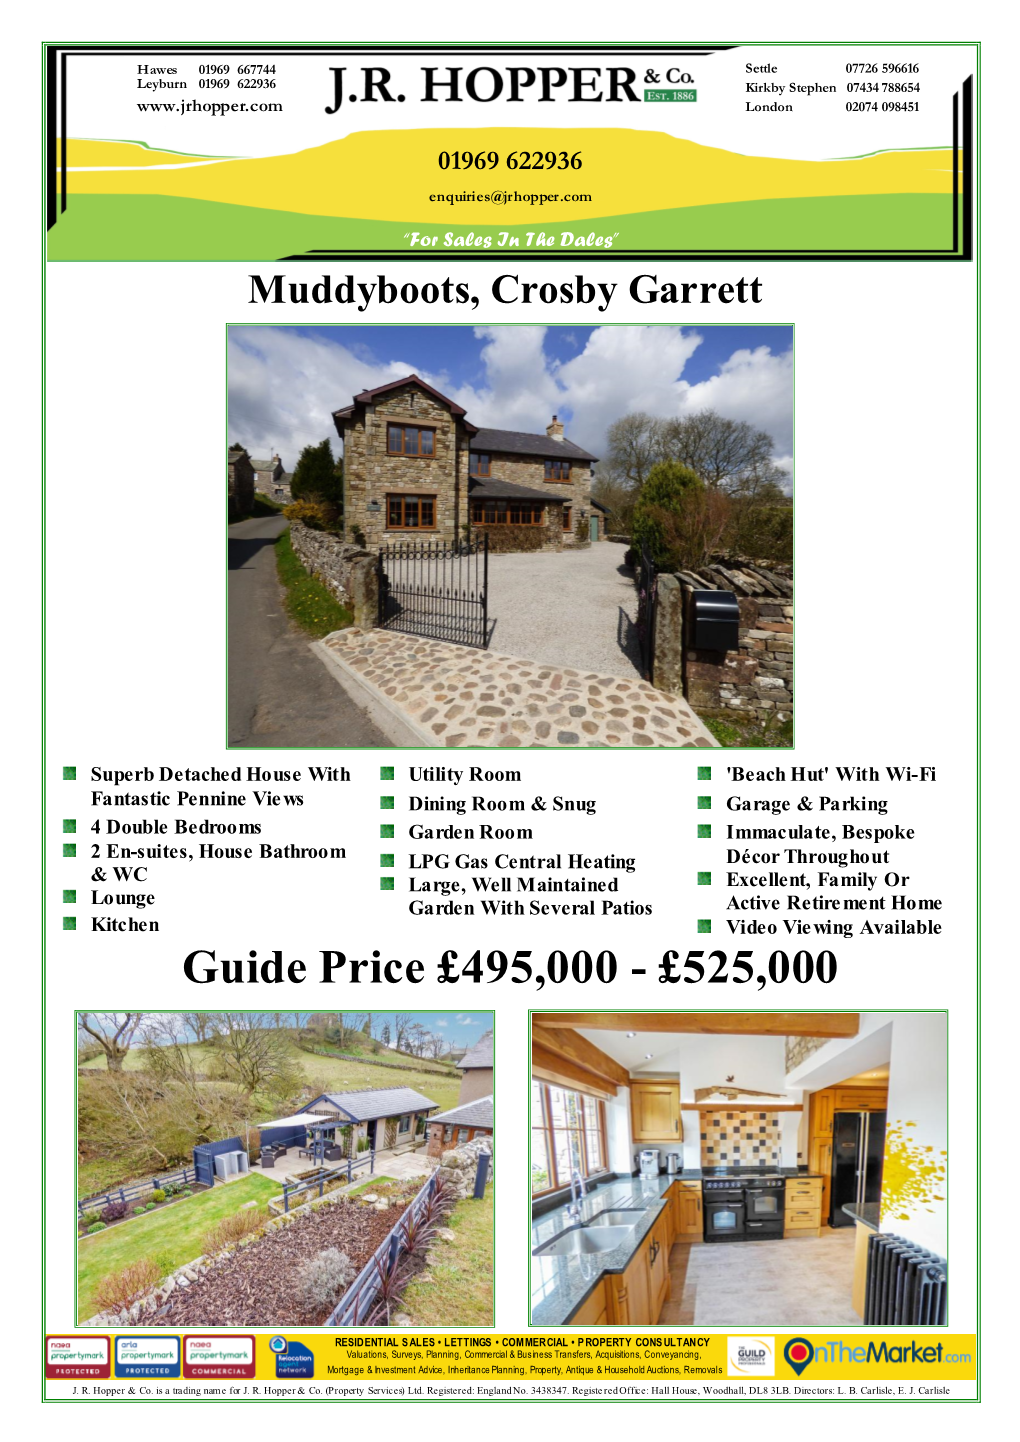 Muddyboots, Crosby Garrett Guide Price £495000